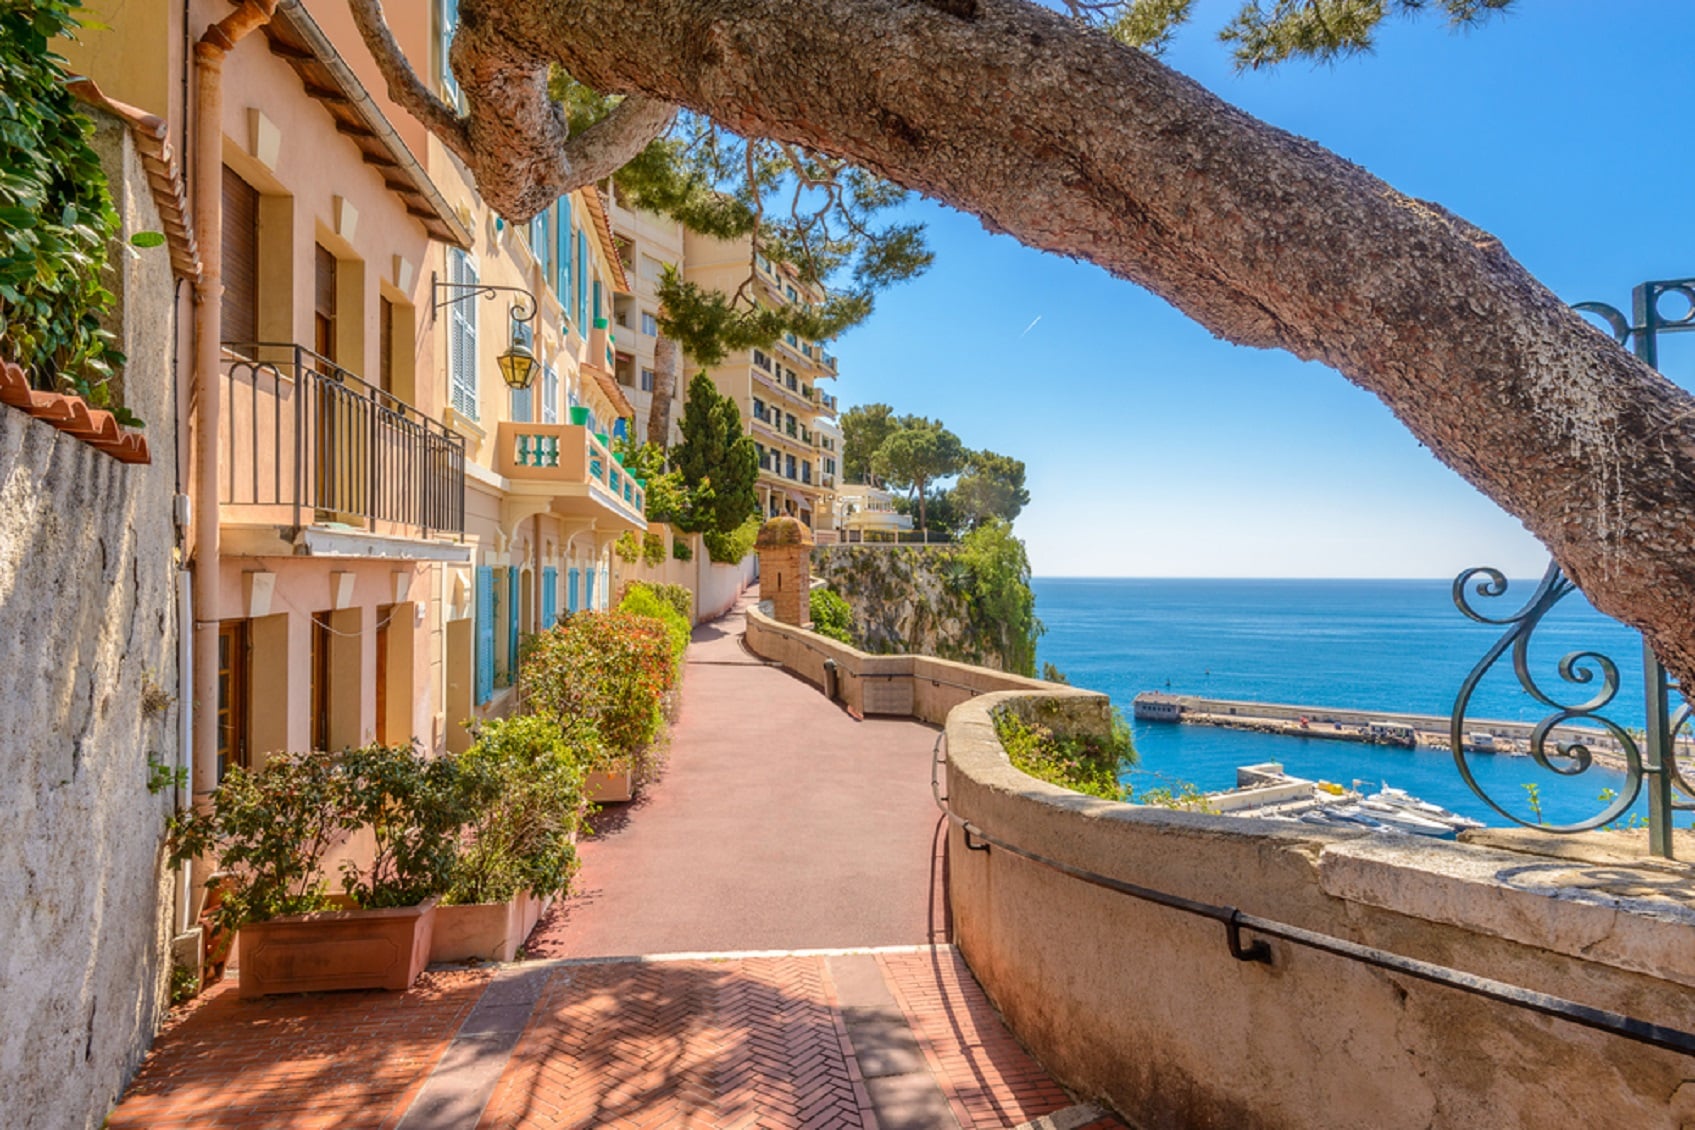 Rue du Village de Monaco à Monaco Monte Carlo, France.